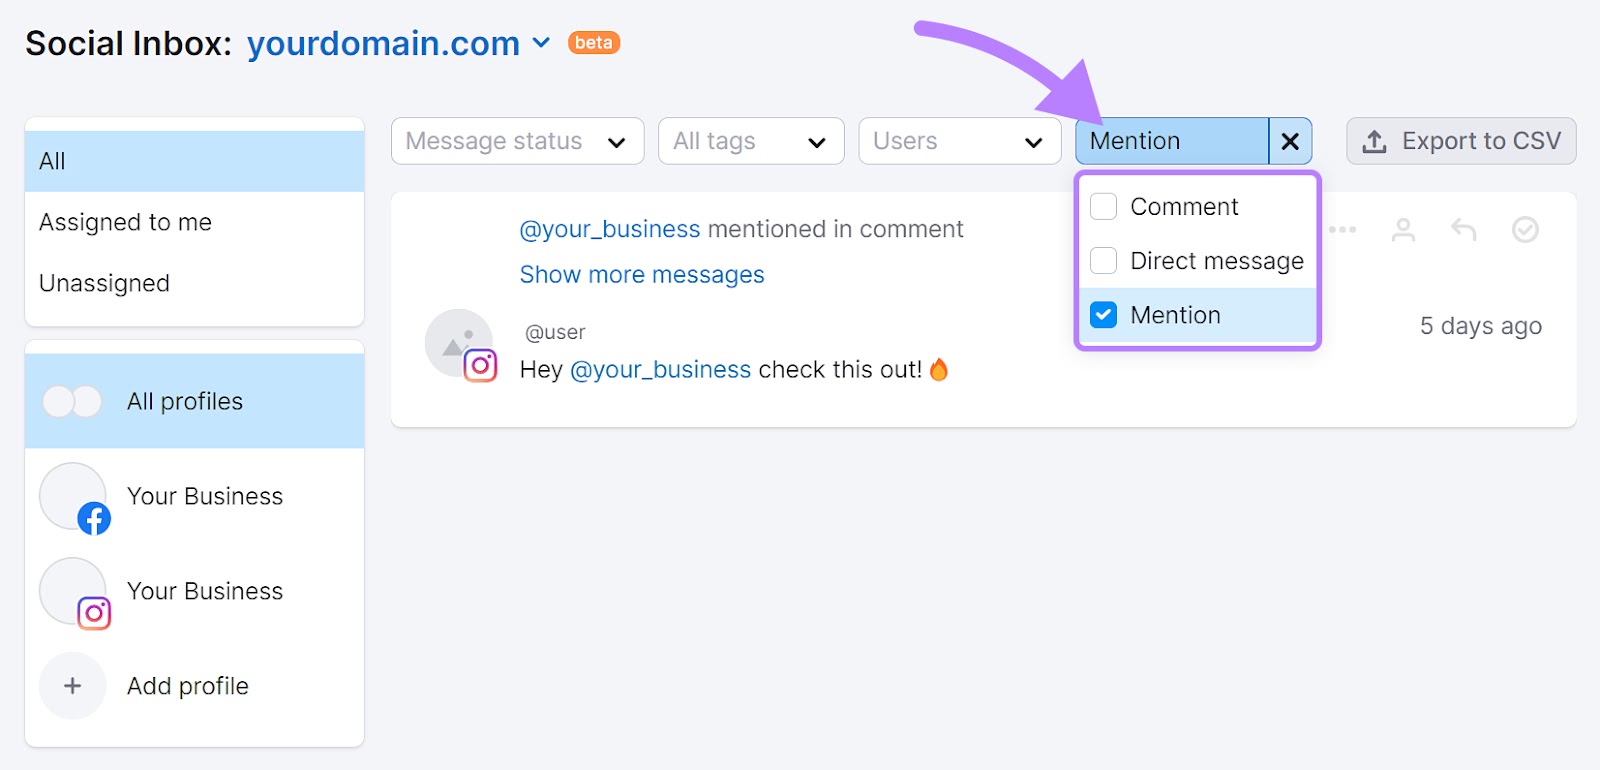 Semrush Social Inbox dashboard